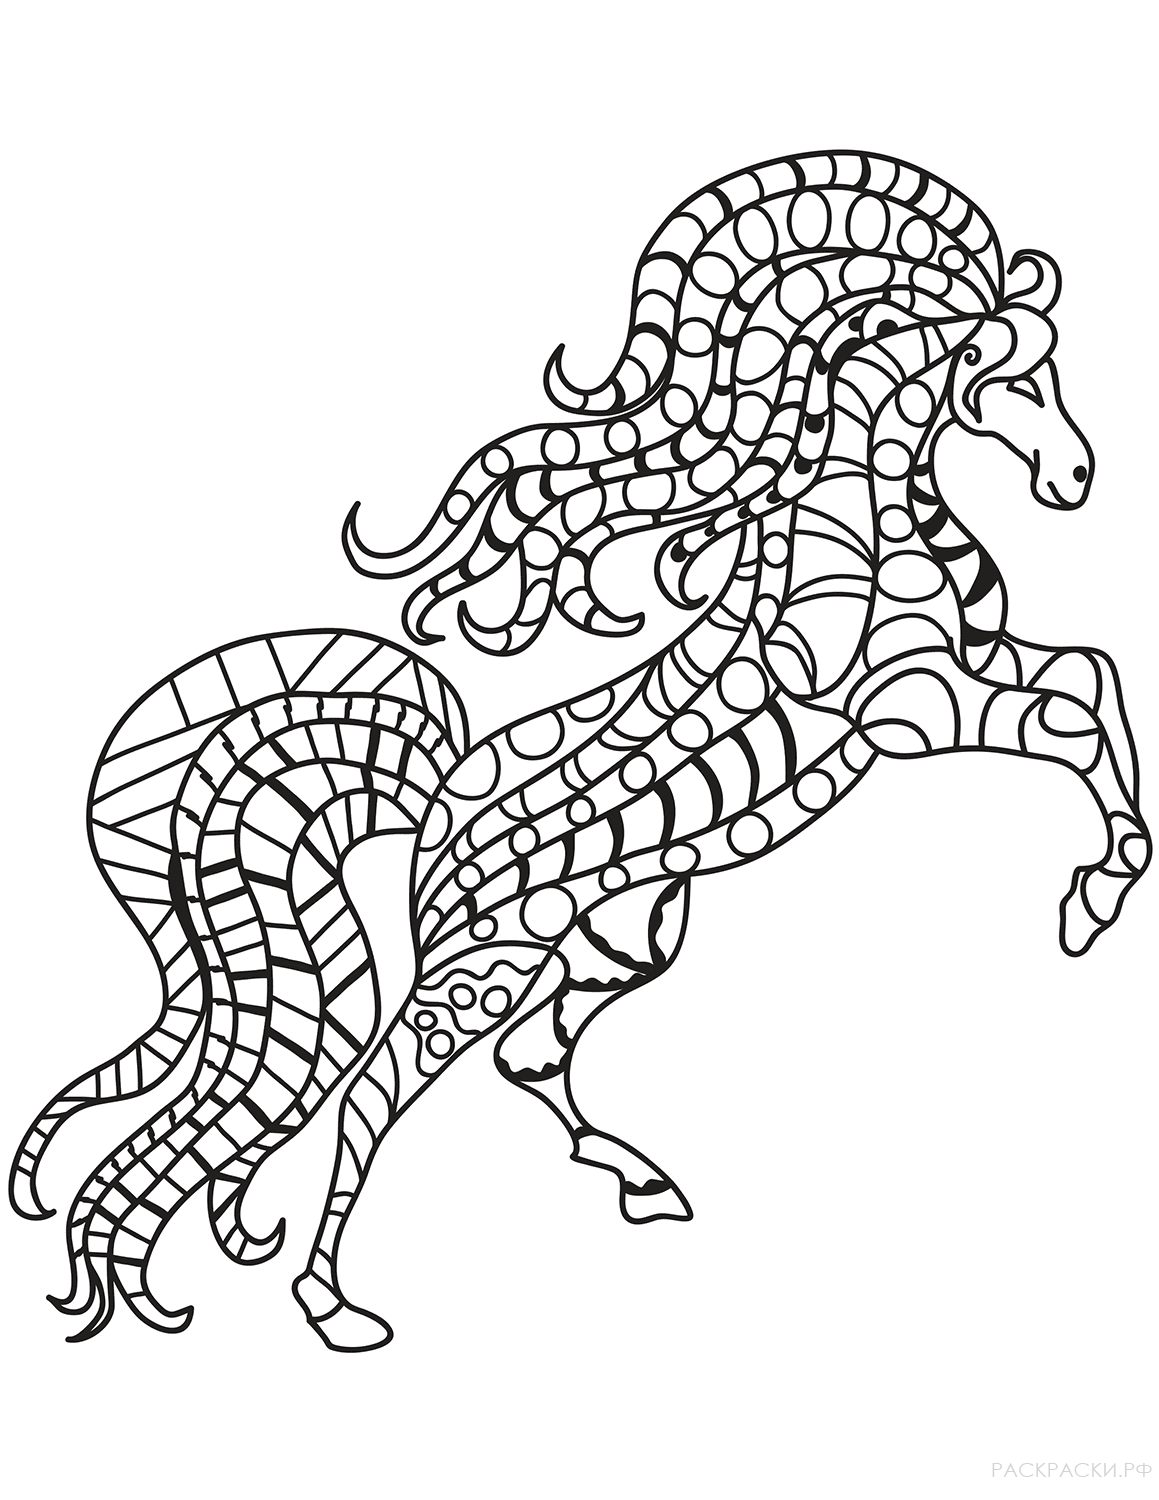 Раскраска Лошадь на дыбах в технике дзентангл